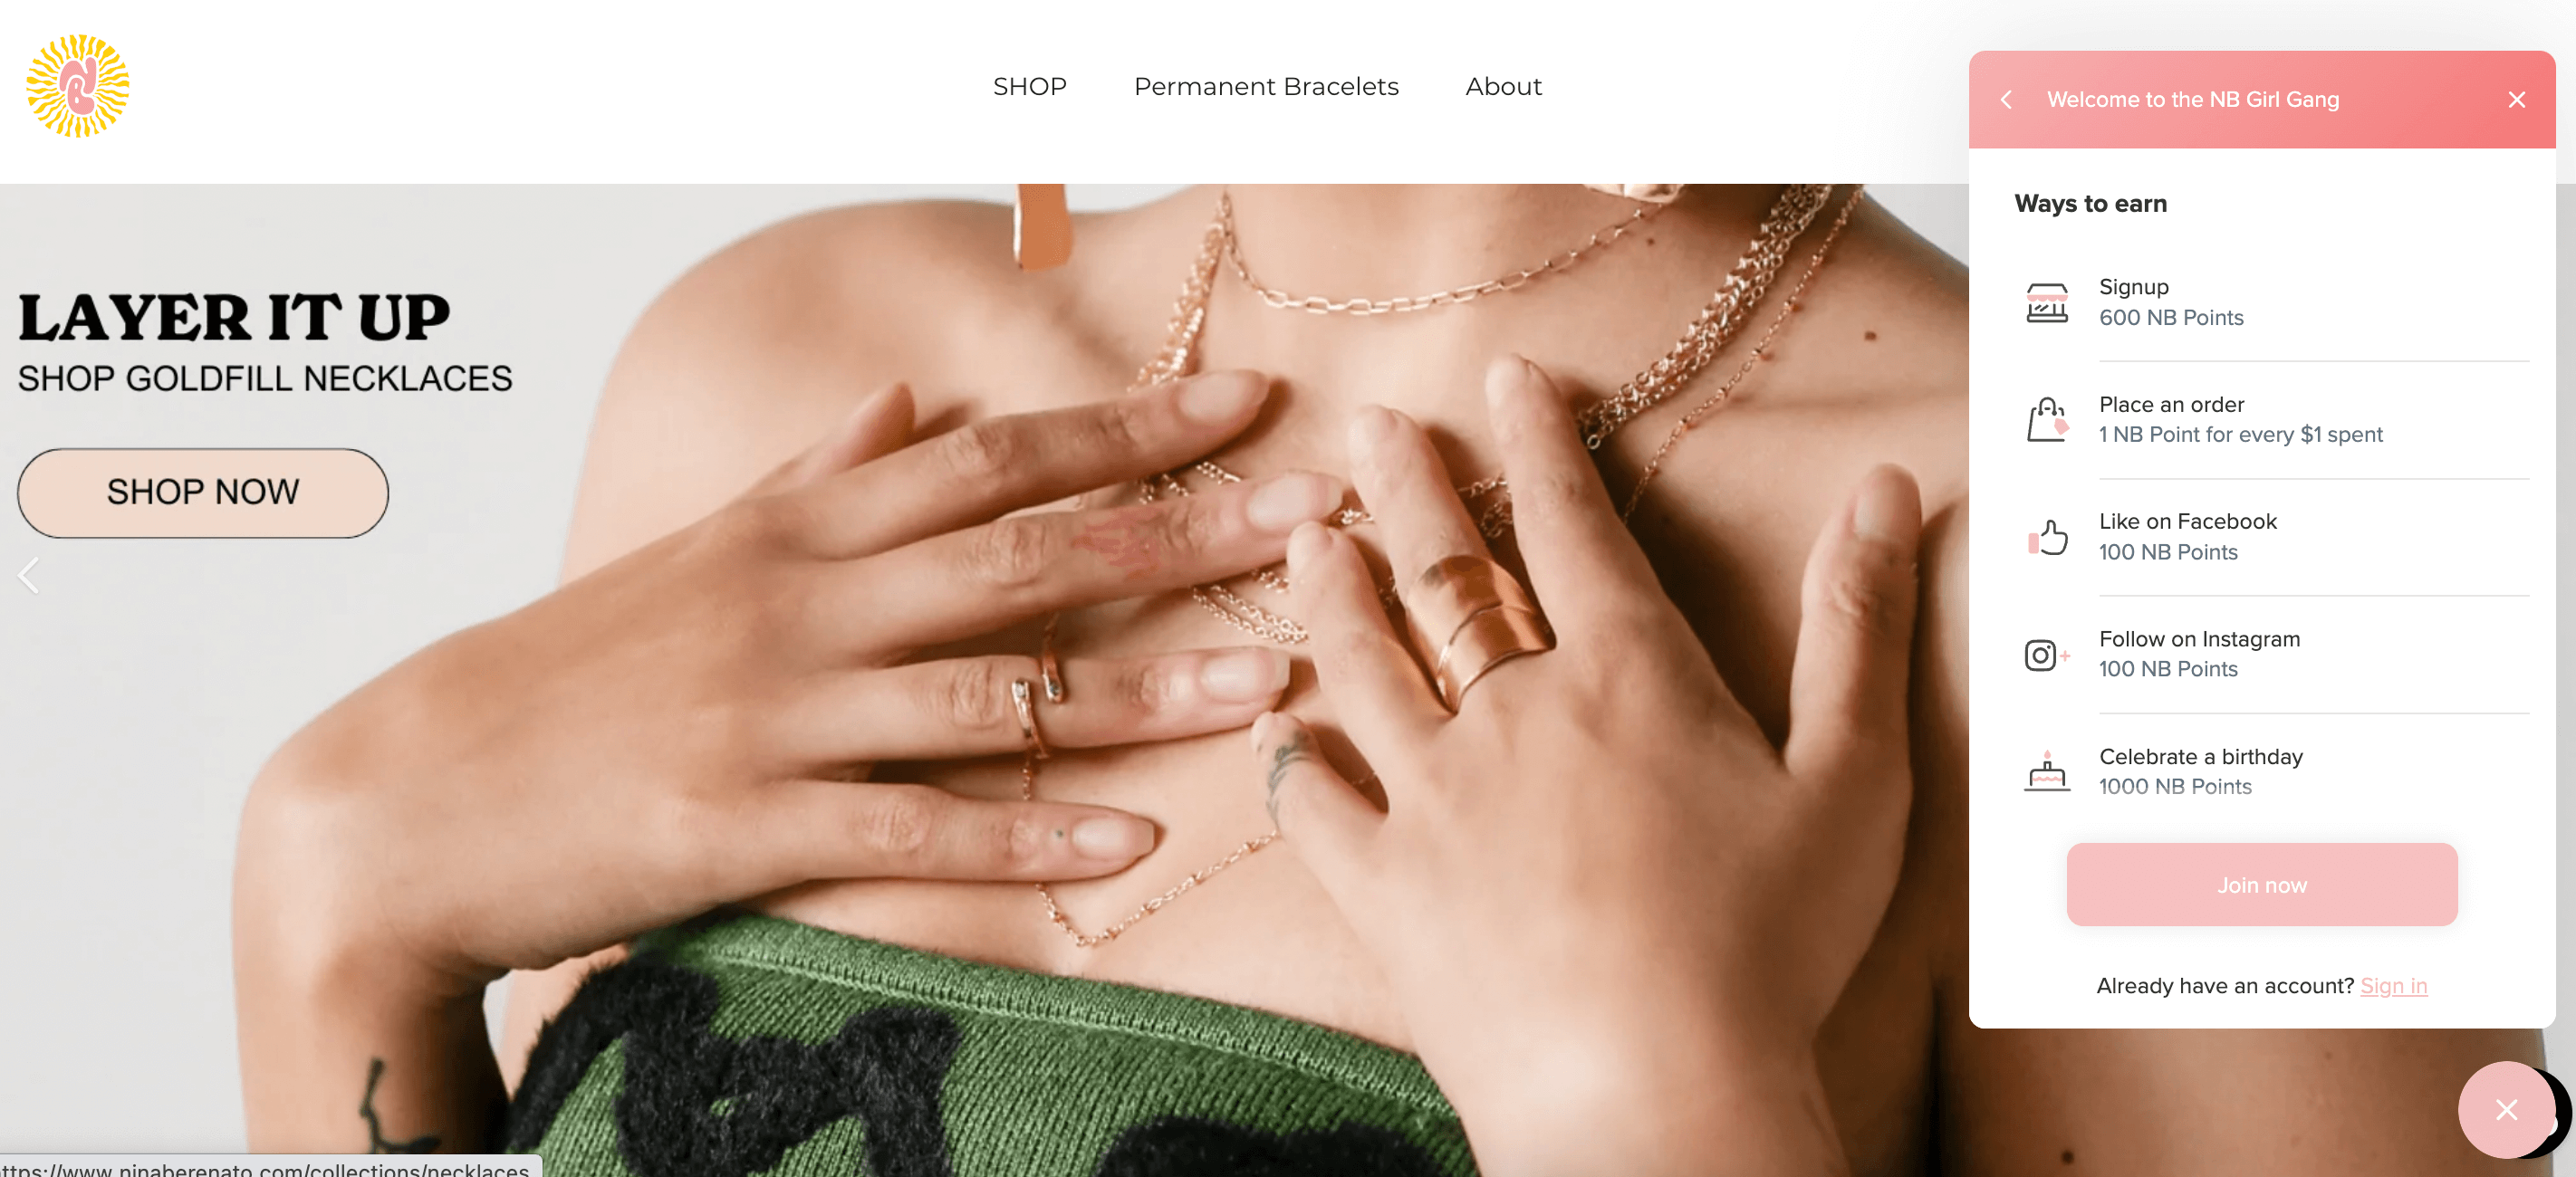 screenshot of ecommerce jewelry brand Nina Berenato and its loyalty program